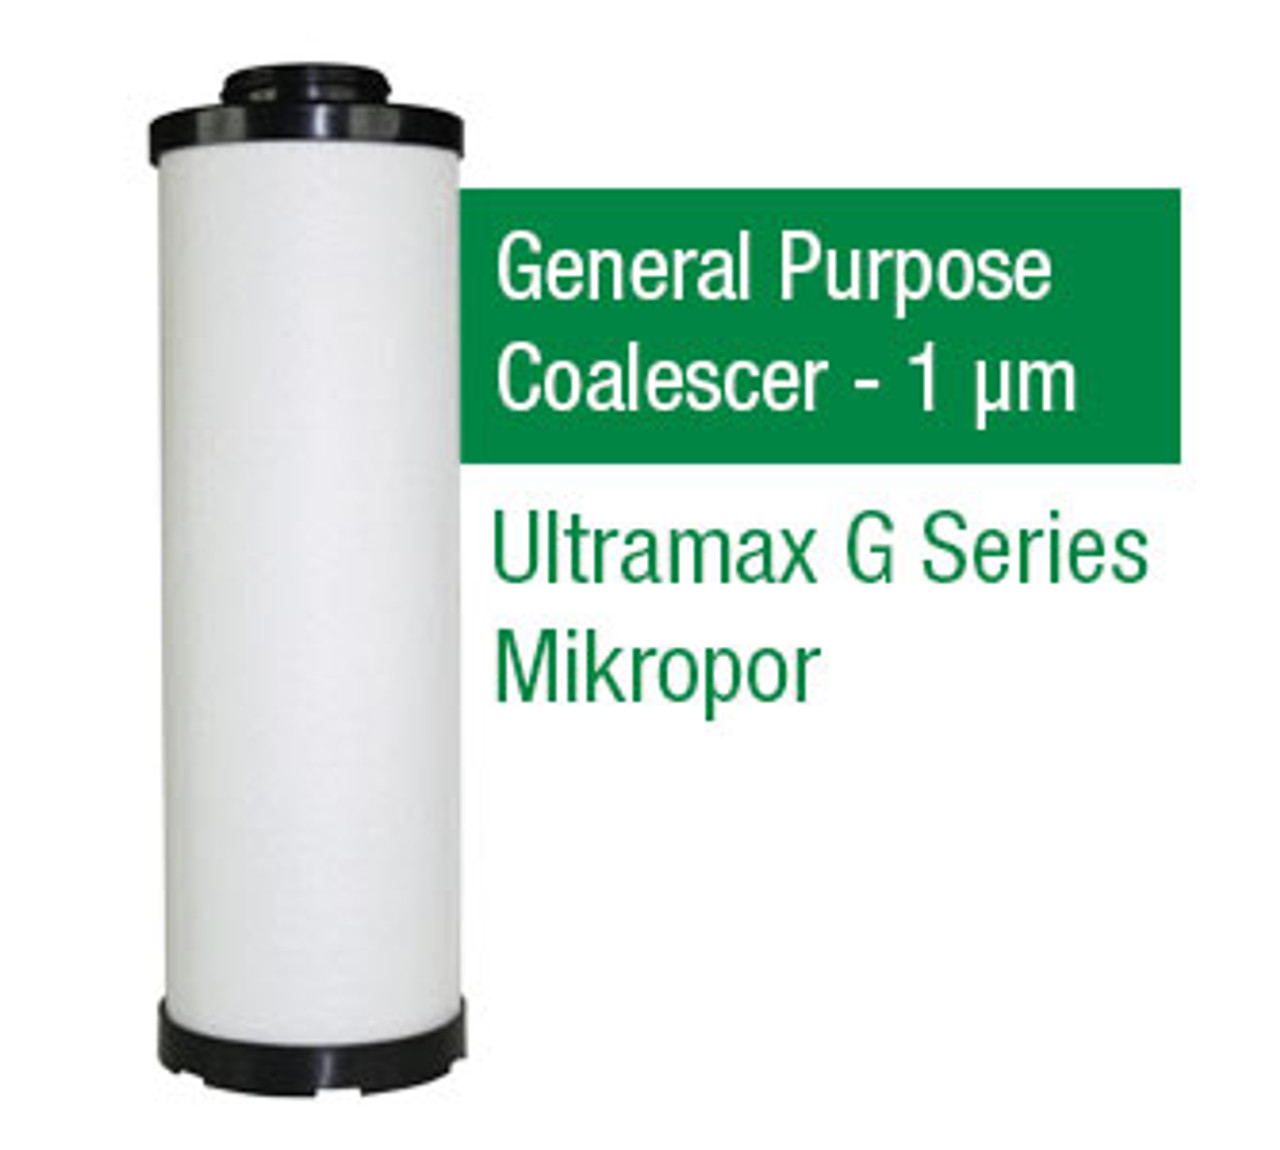 M851X - Grade X - General Purpose Coalescer - 1 um (M851X/G851MX)